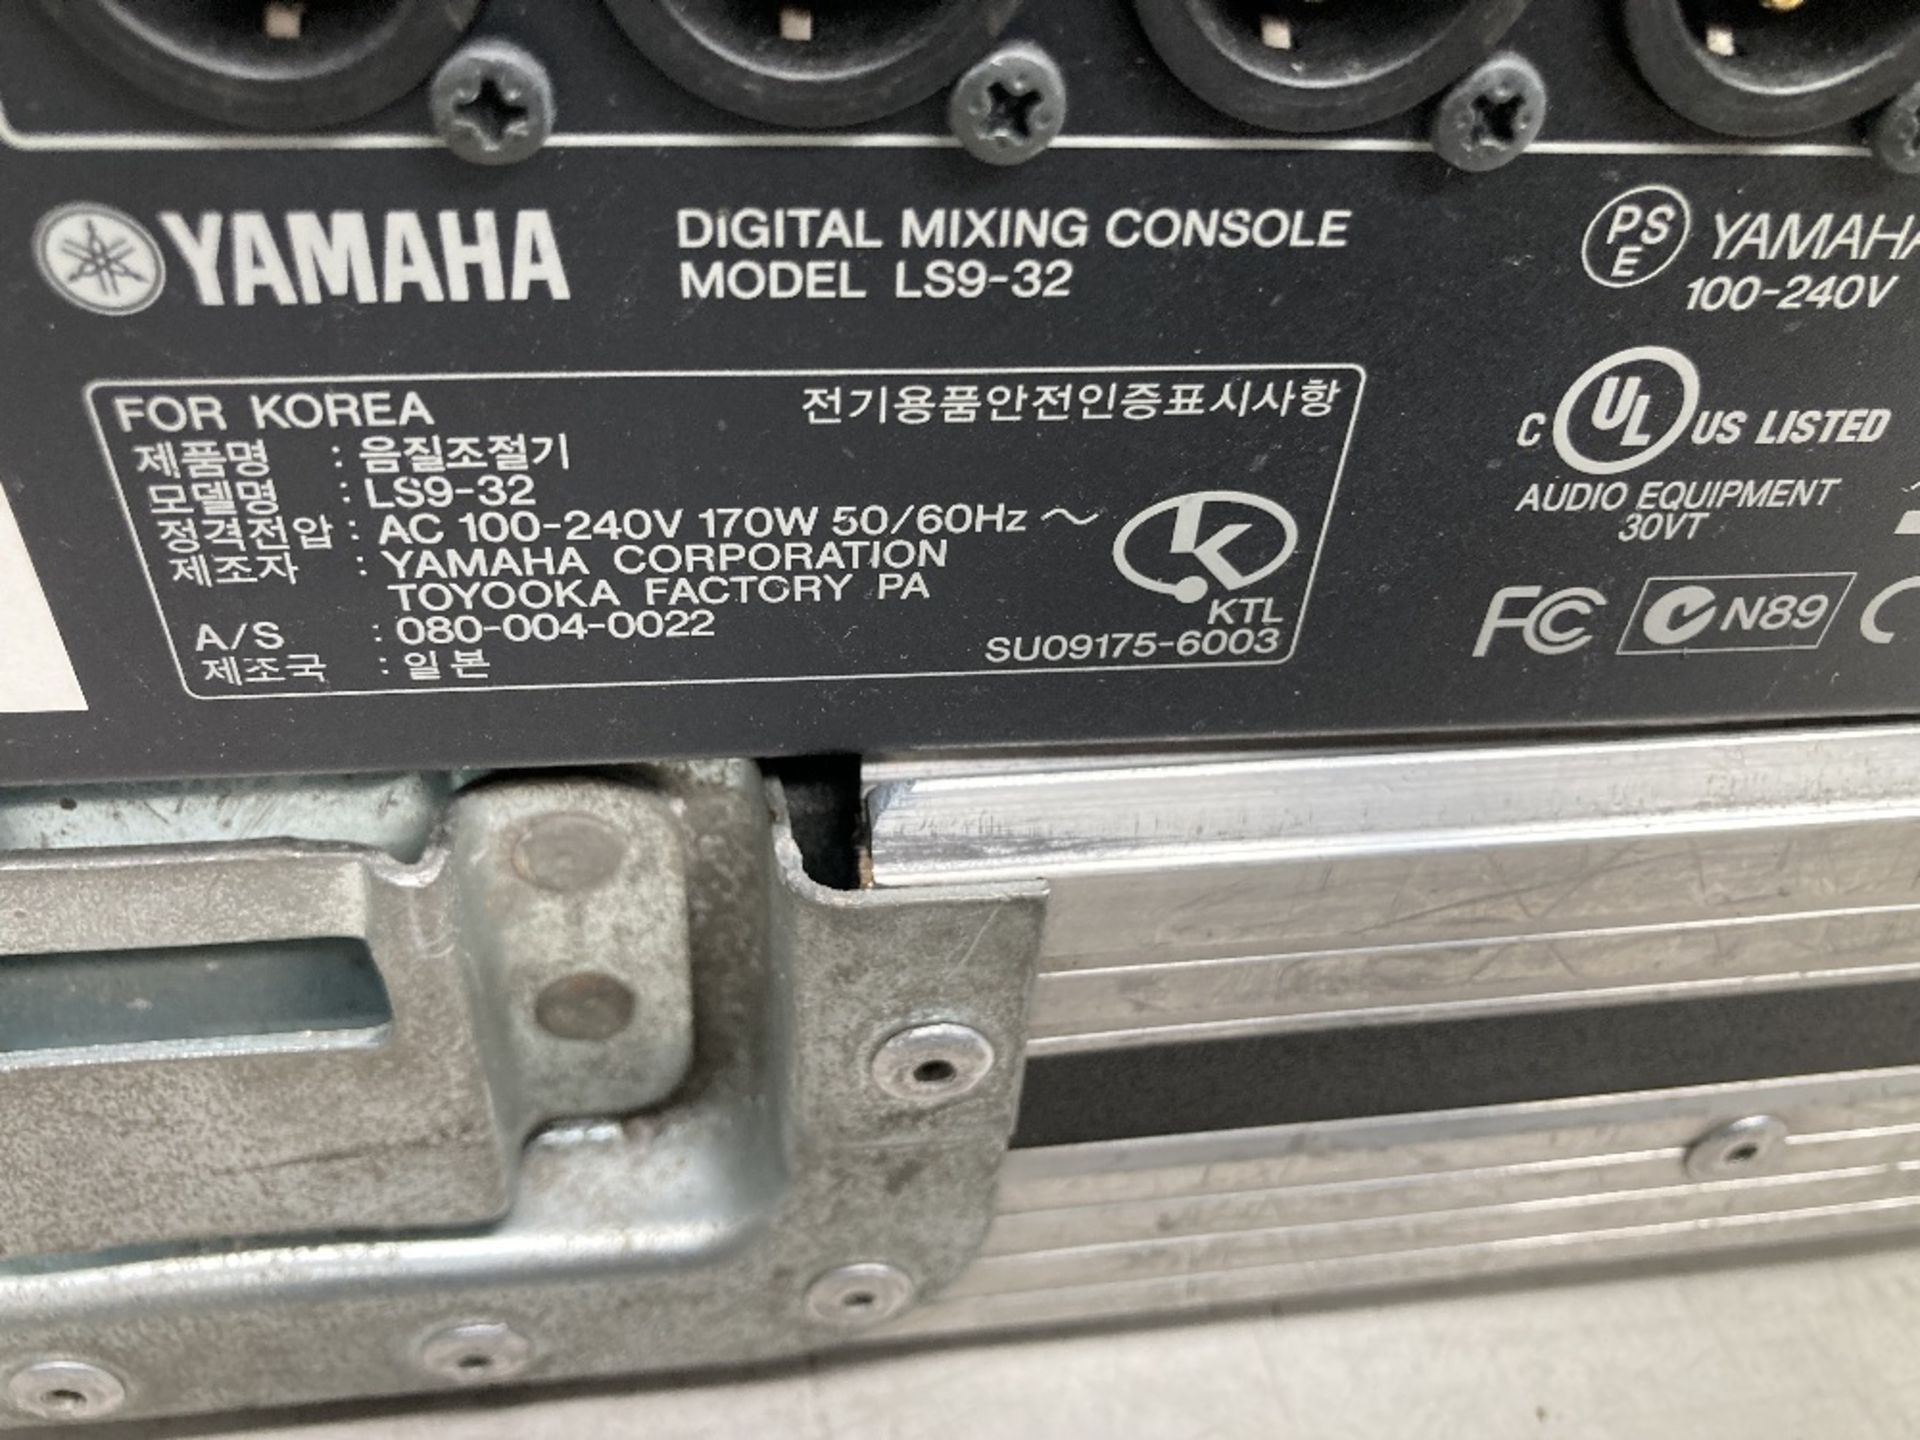 Yamaha LS9-32 Digital Mixing Console & Heavy Duty Mobile Flight Case - Image 7 of 14